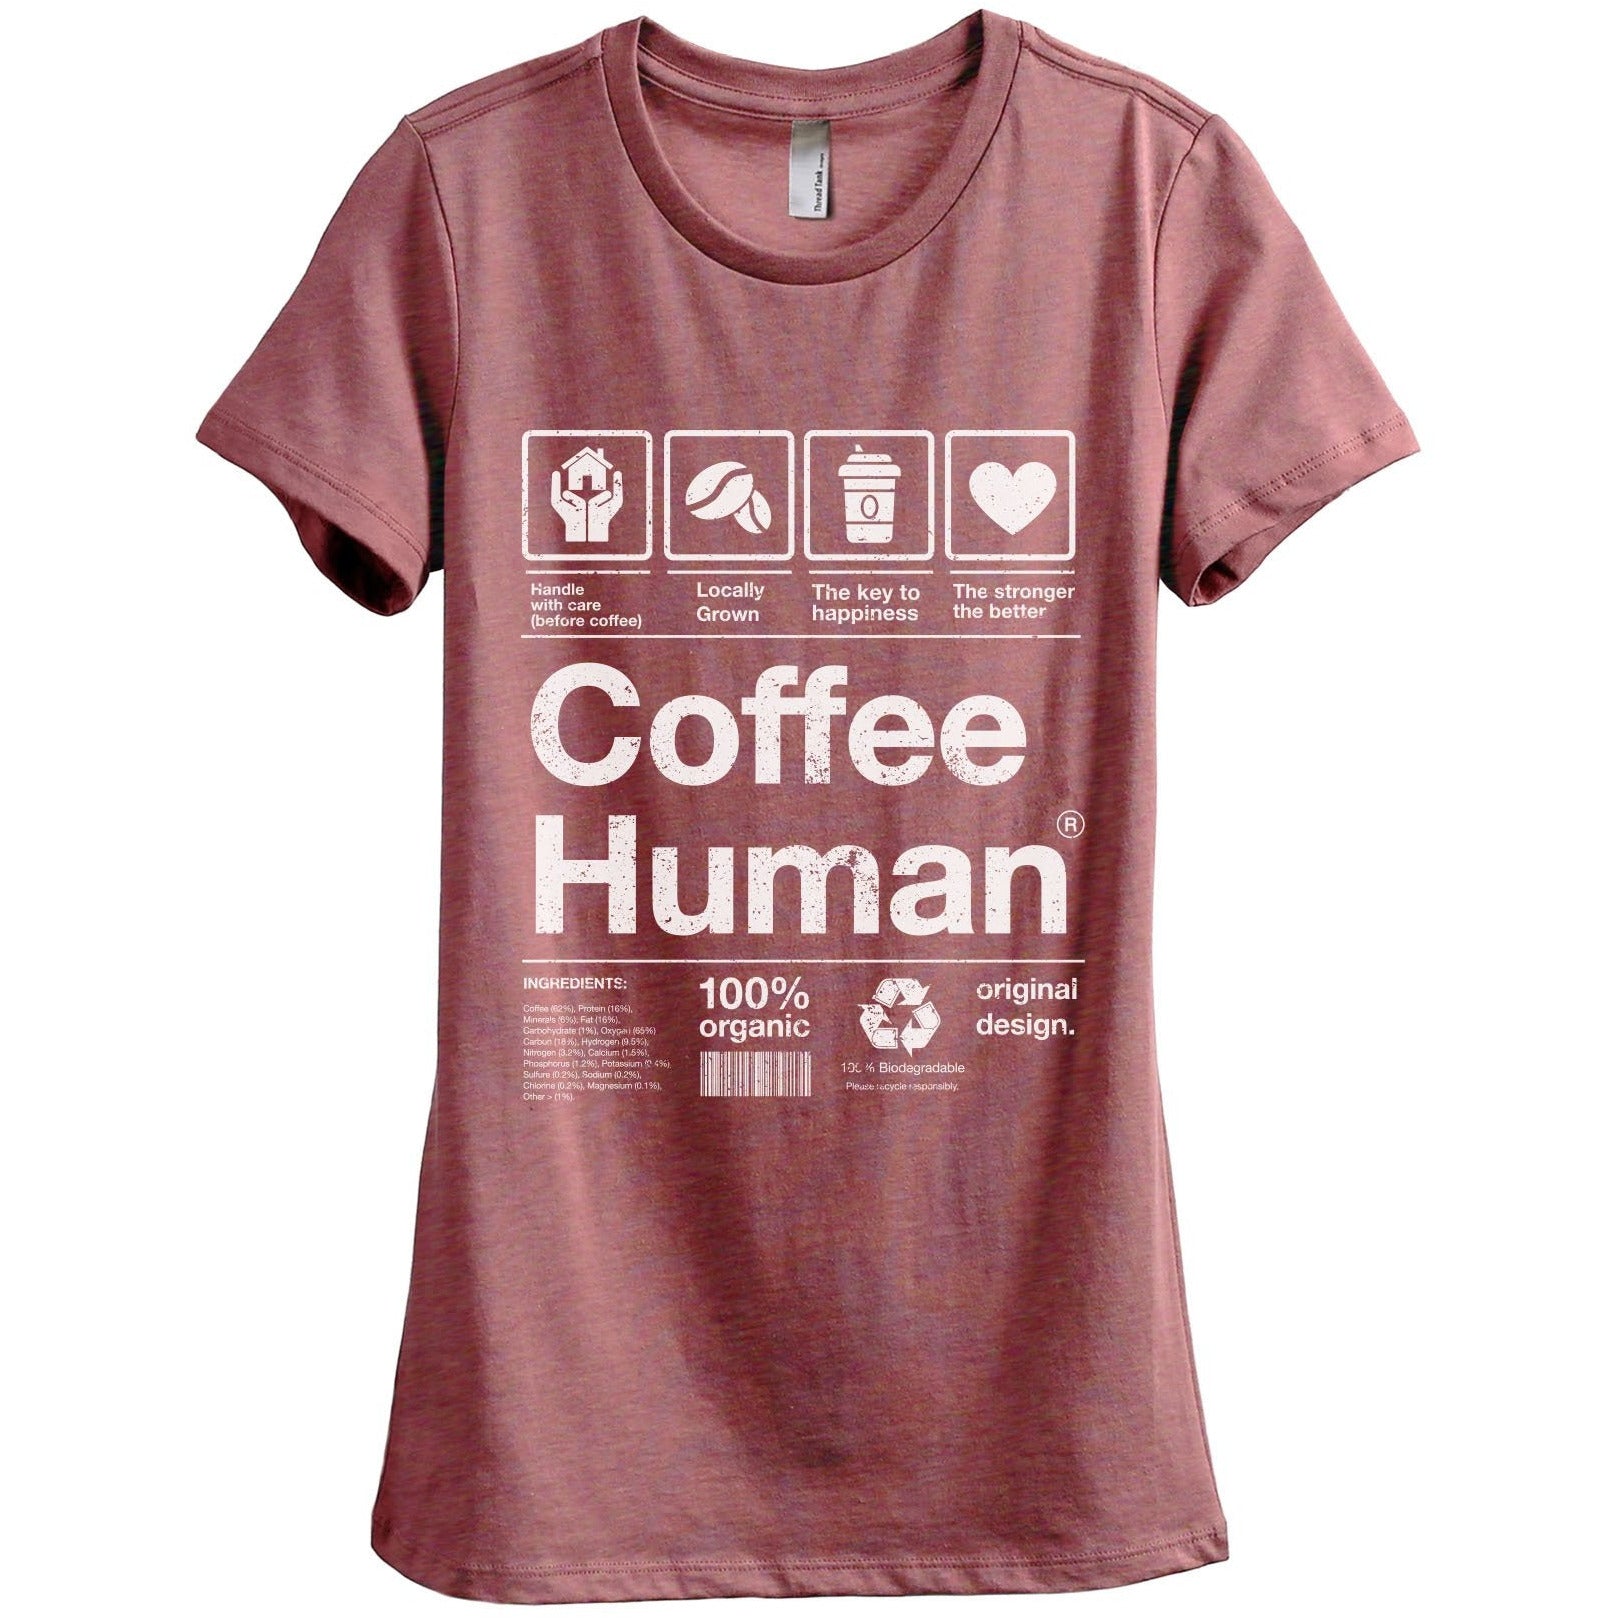 Coffee Human - Thread Tank | Stories You Can Wear | T-Shirts, Tank Tops and Sweatshirts